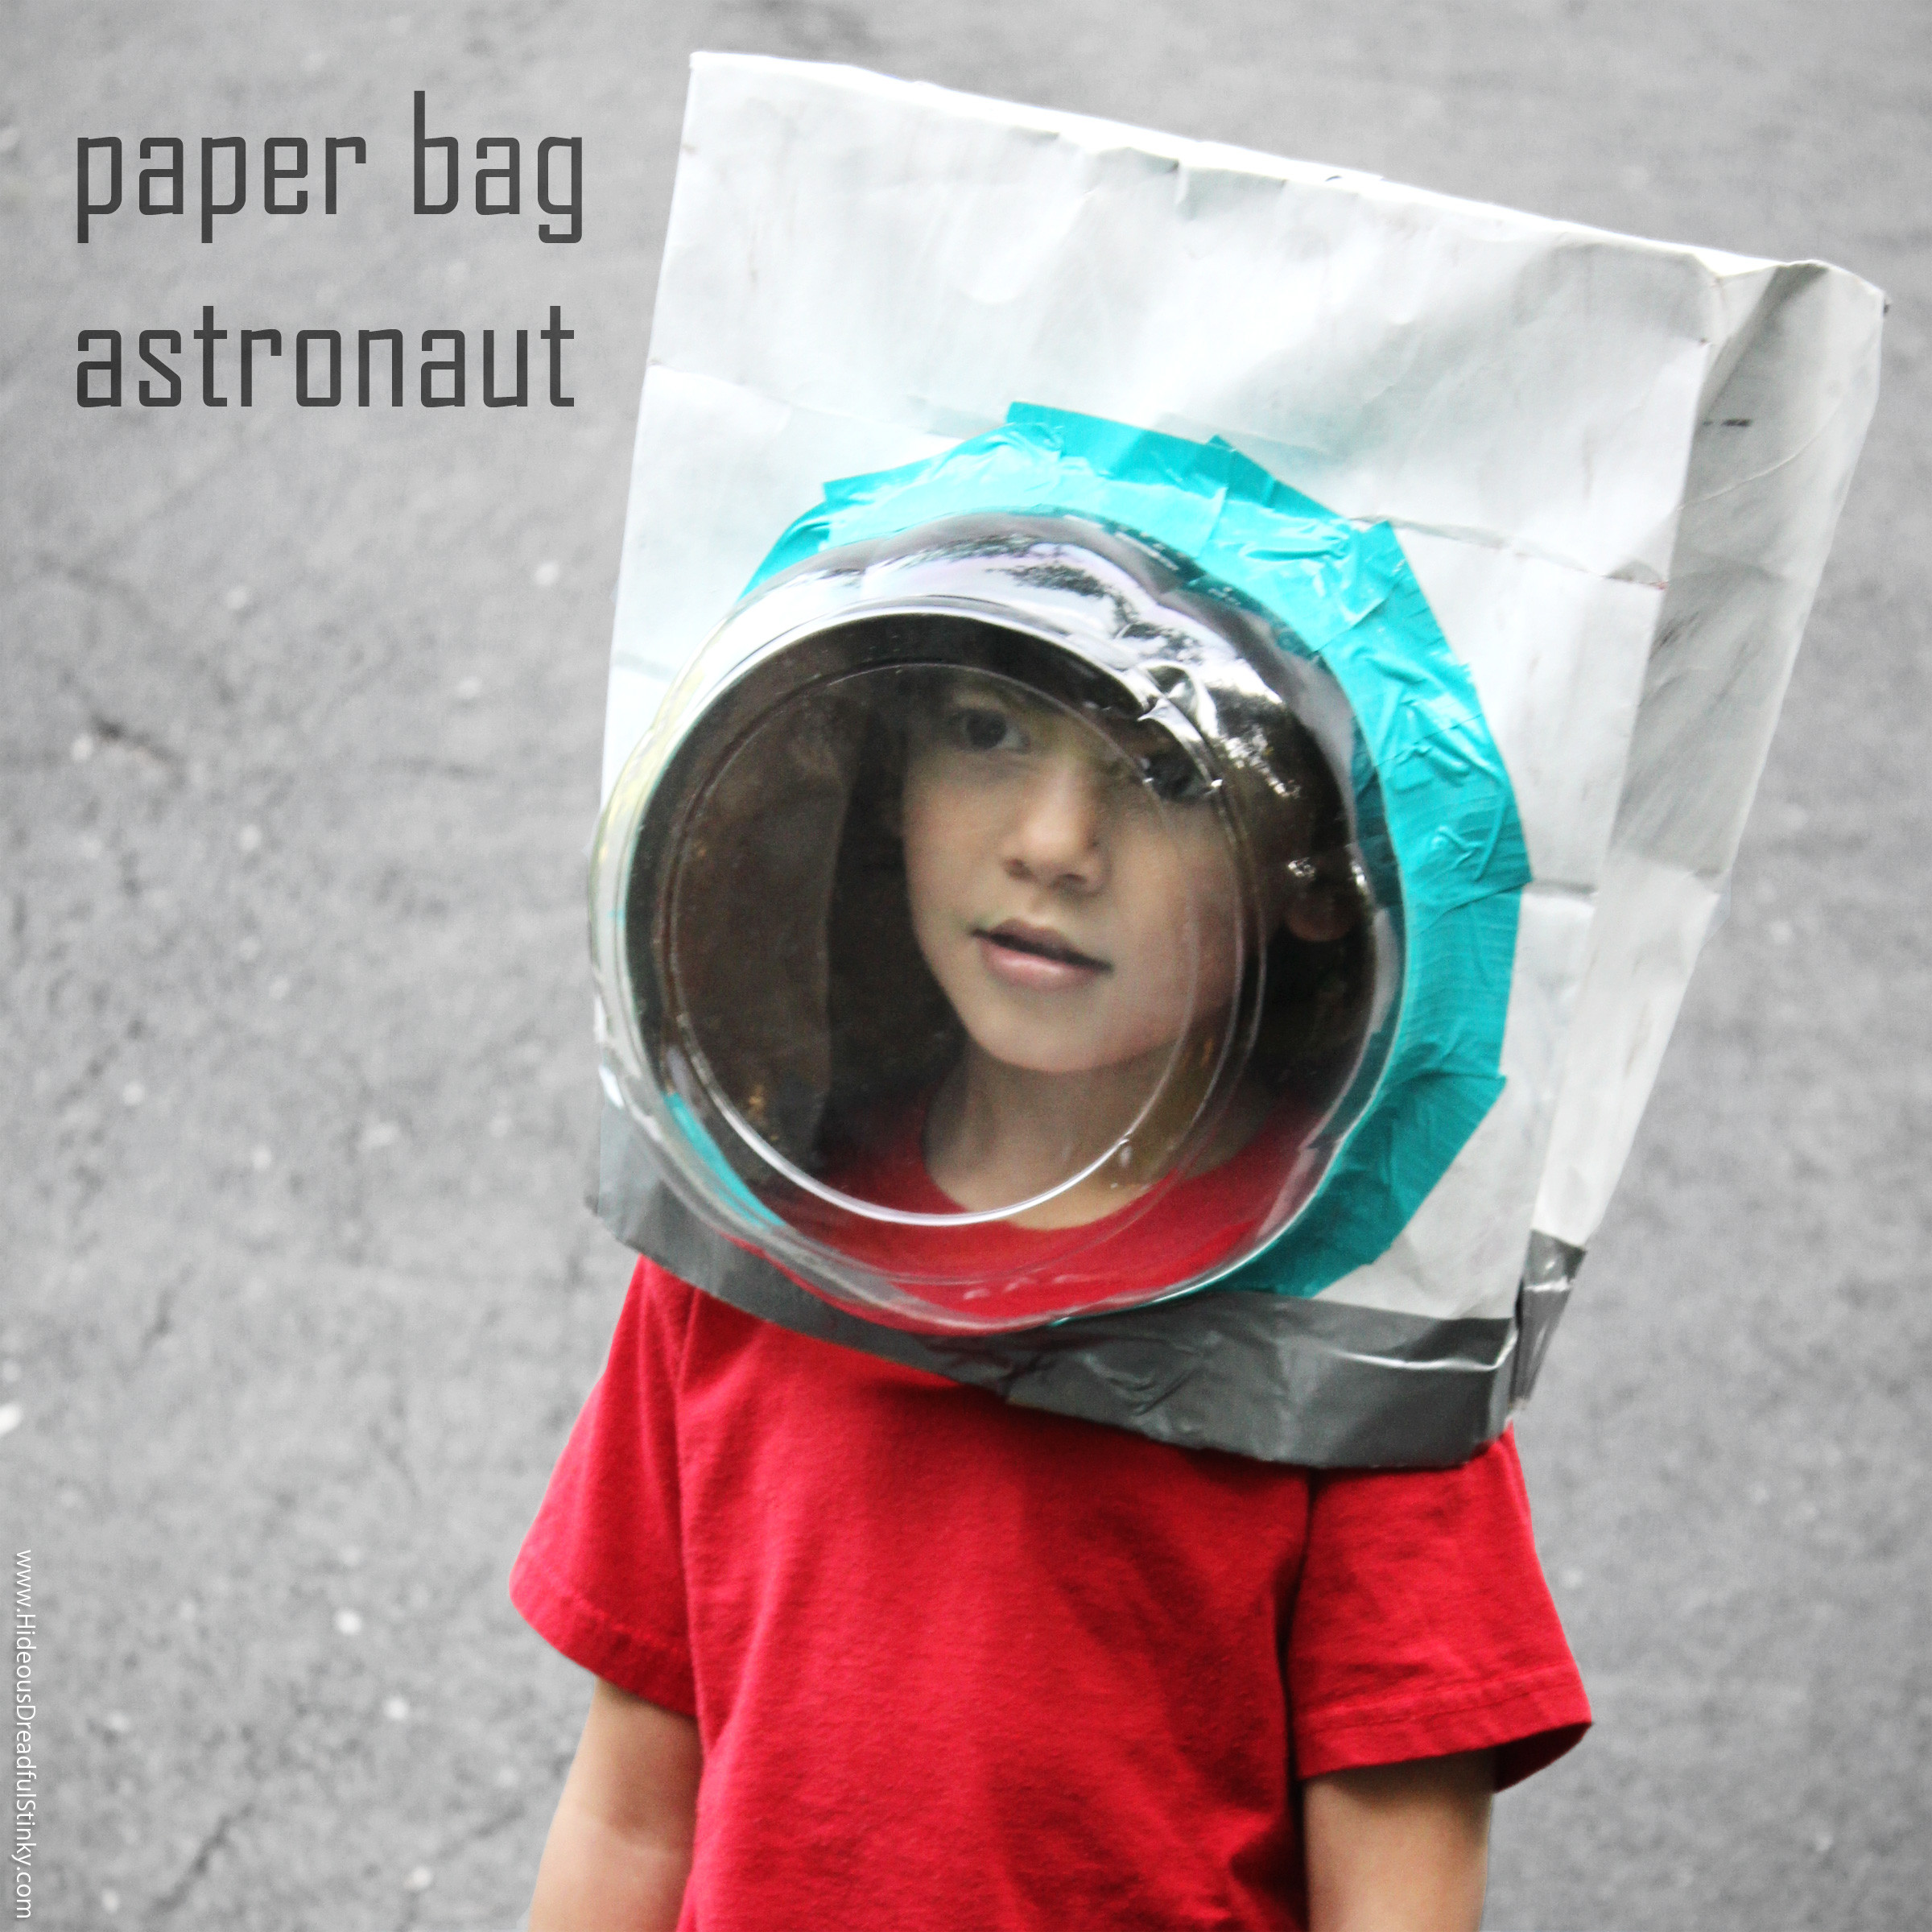 Шлем космонавта из папье маше. Космический шлем. Шлем Космонавта для ребёнка. Шлем Космонавта для детей из бумаги. Шлем Космонавта своимиируками.